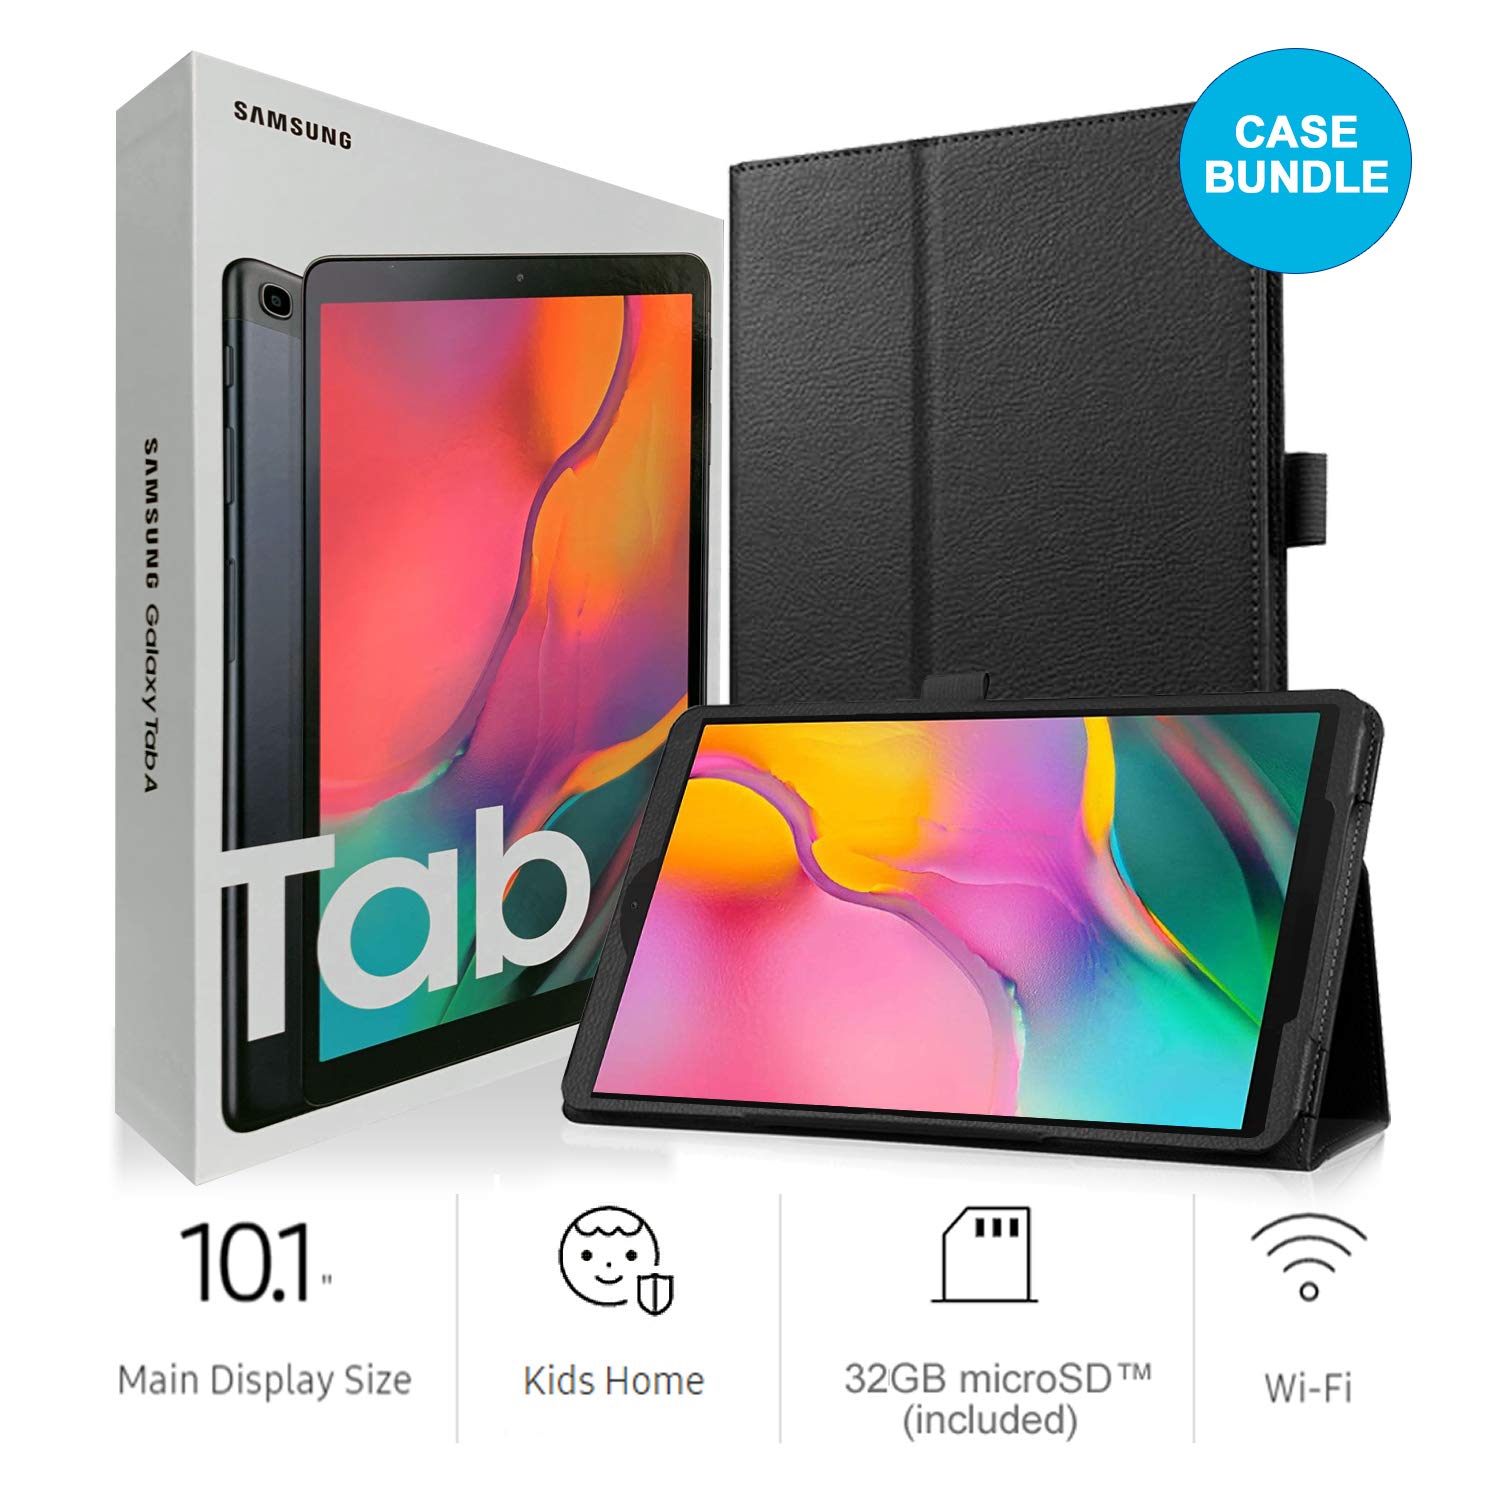 Samsung Galaxy Tab A SM-T510 10.1-Inch - Best Reviews Tablet